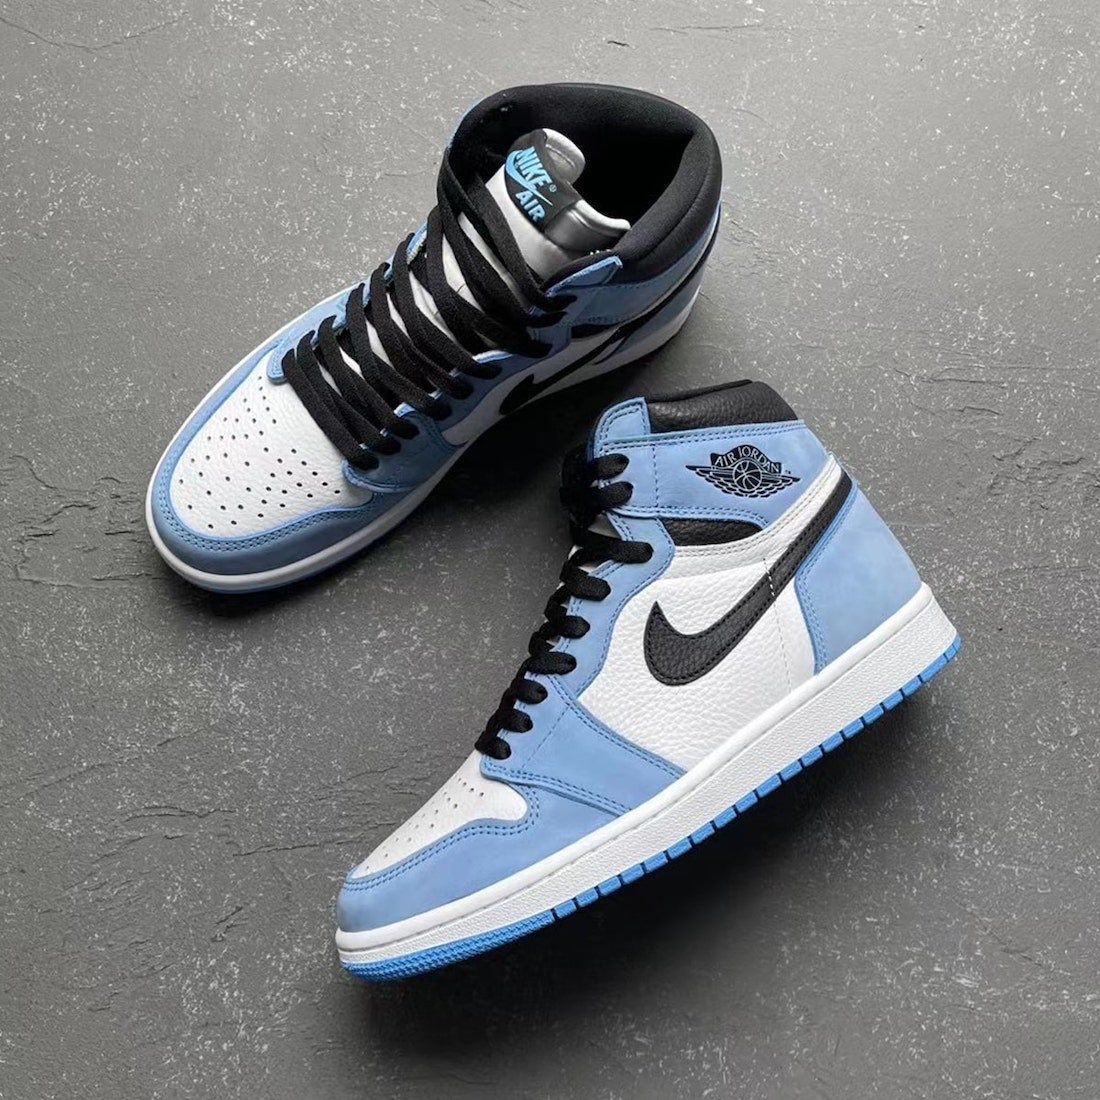 A pair of Air Jordan 1 High OG shoes are shown in a light blue and black colorway. - Air Jordan, Air Jordan 5